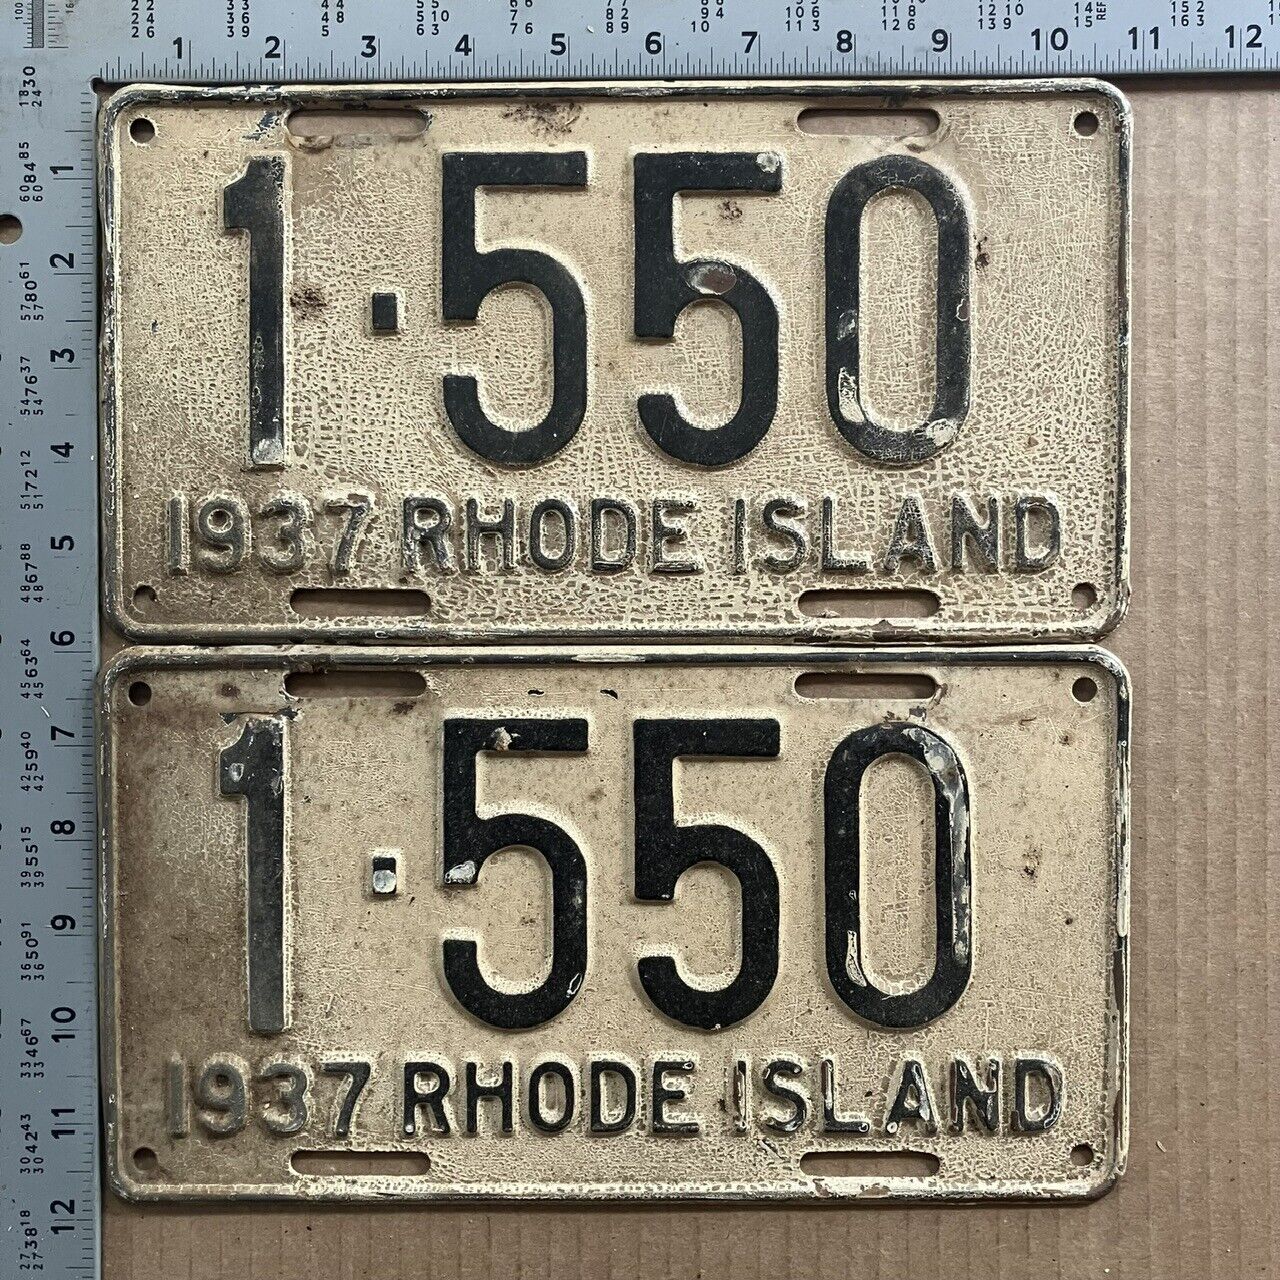 1937 Rhode Island license plate pair 1550 YOM DMV fantastic ORIGINAL 14265